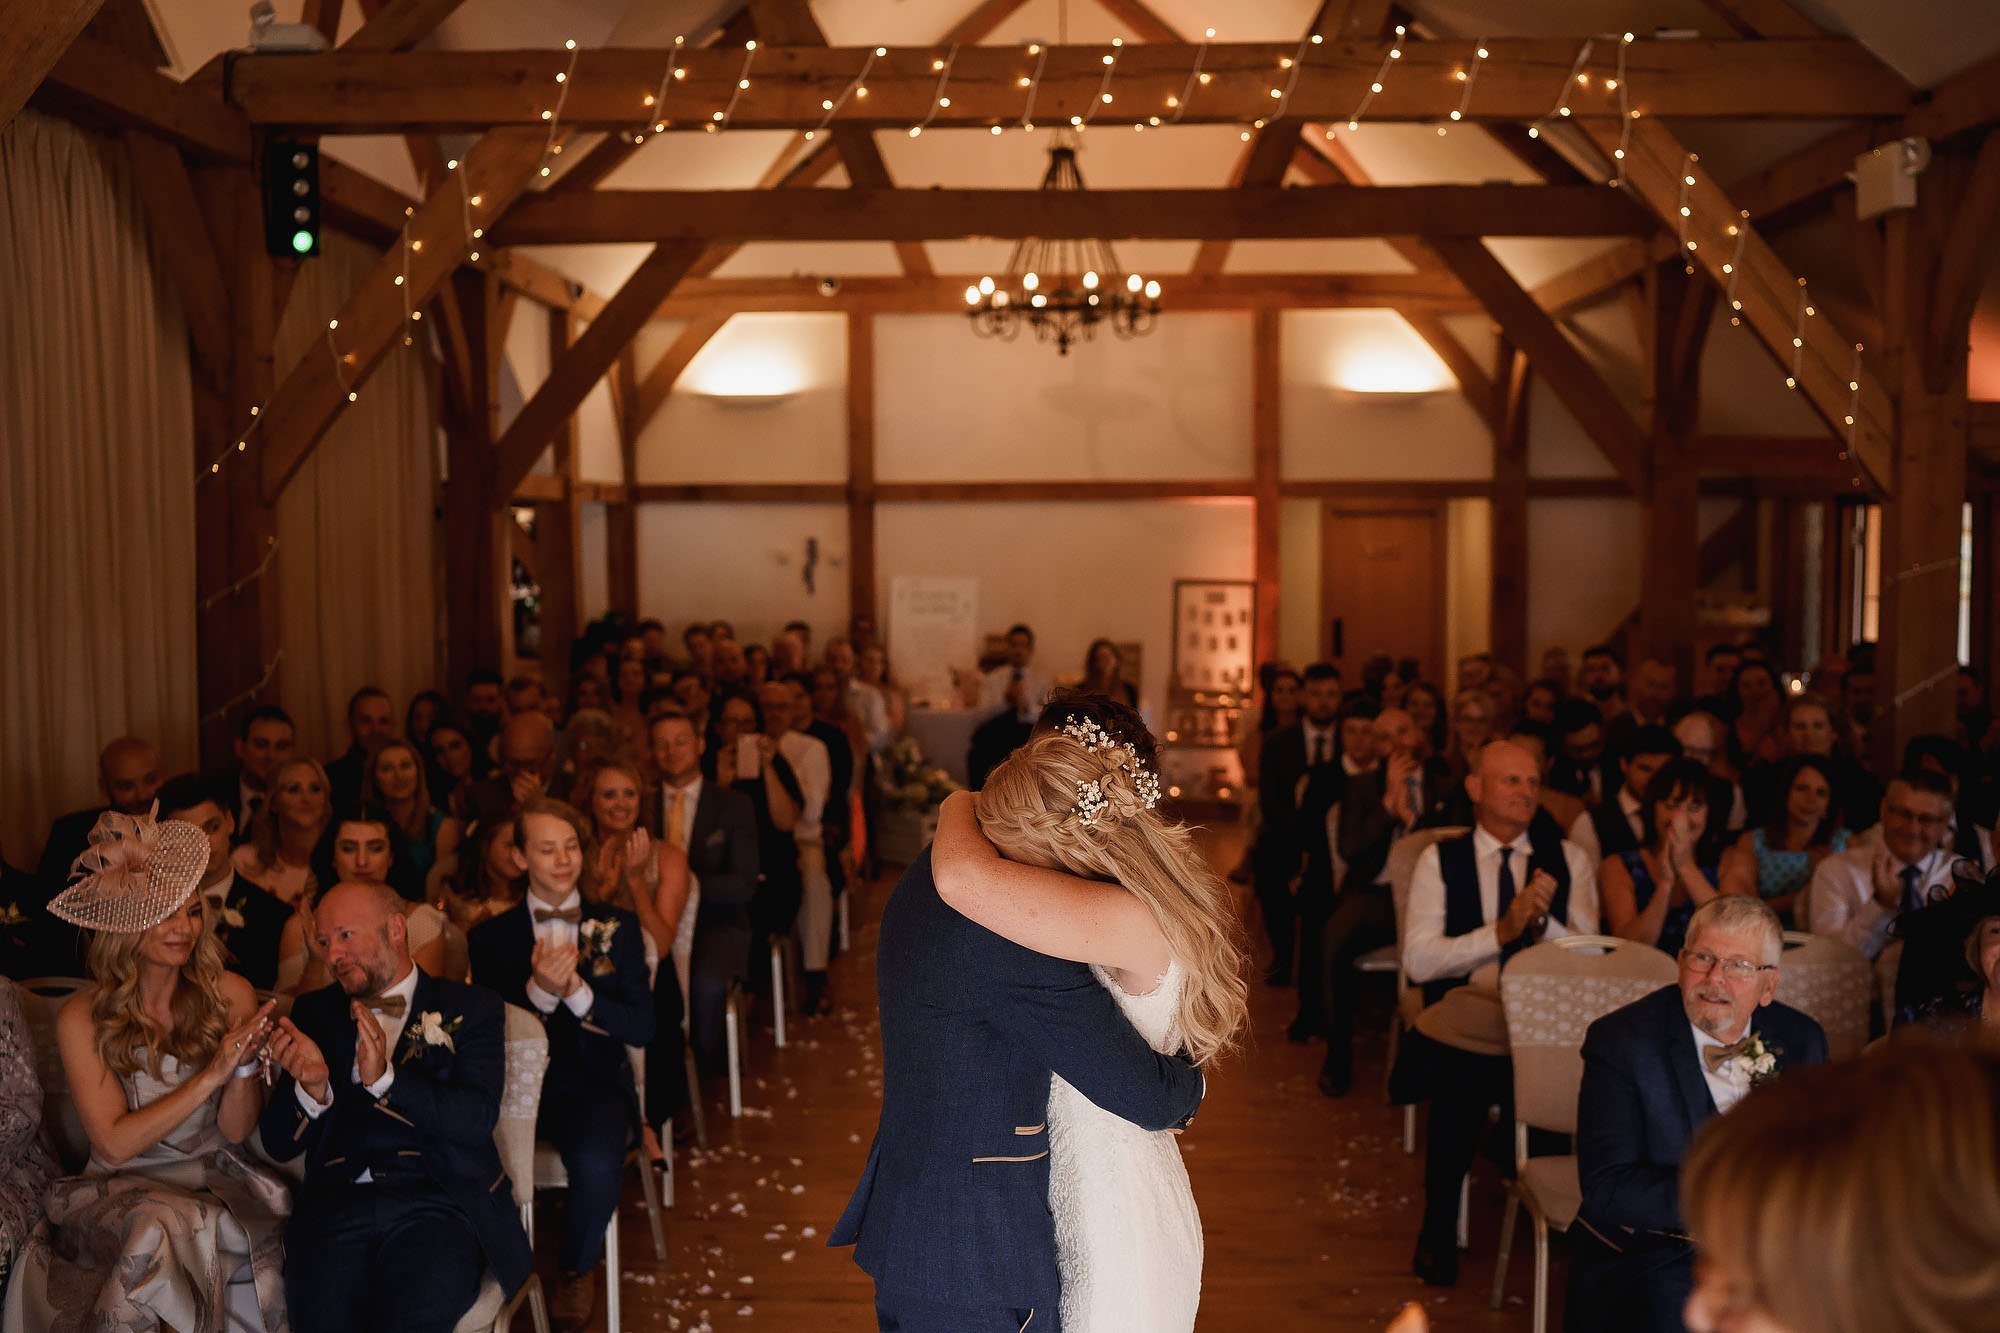 Wedding at sandhole oak barn by arj photography